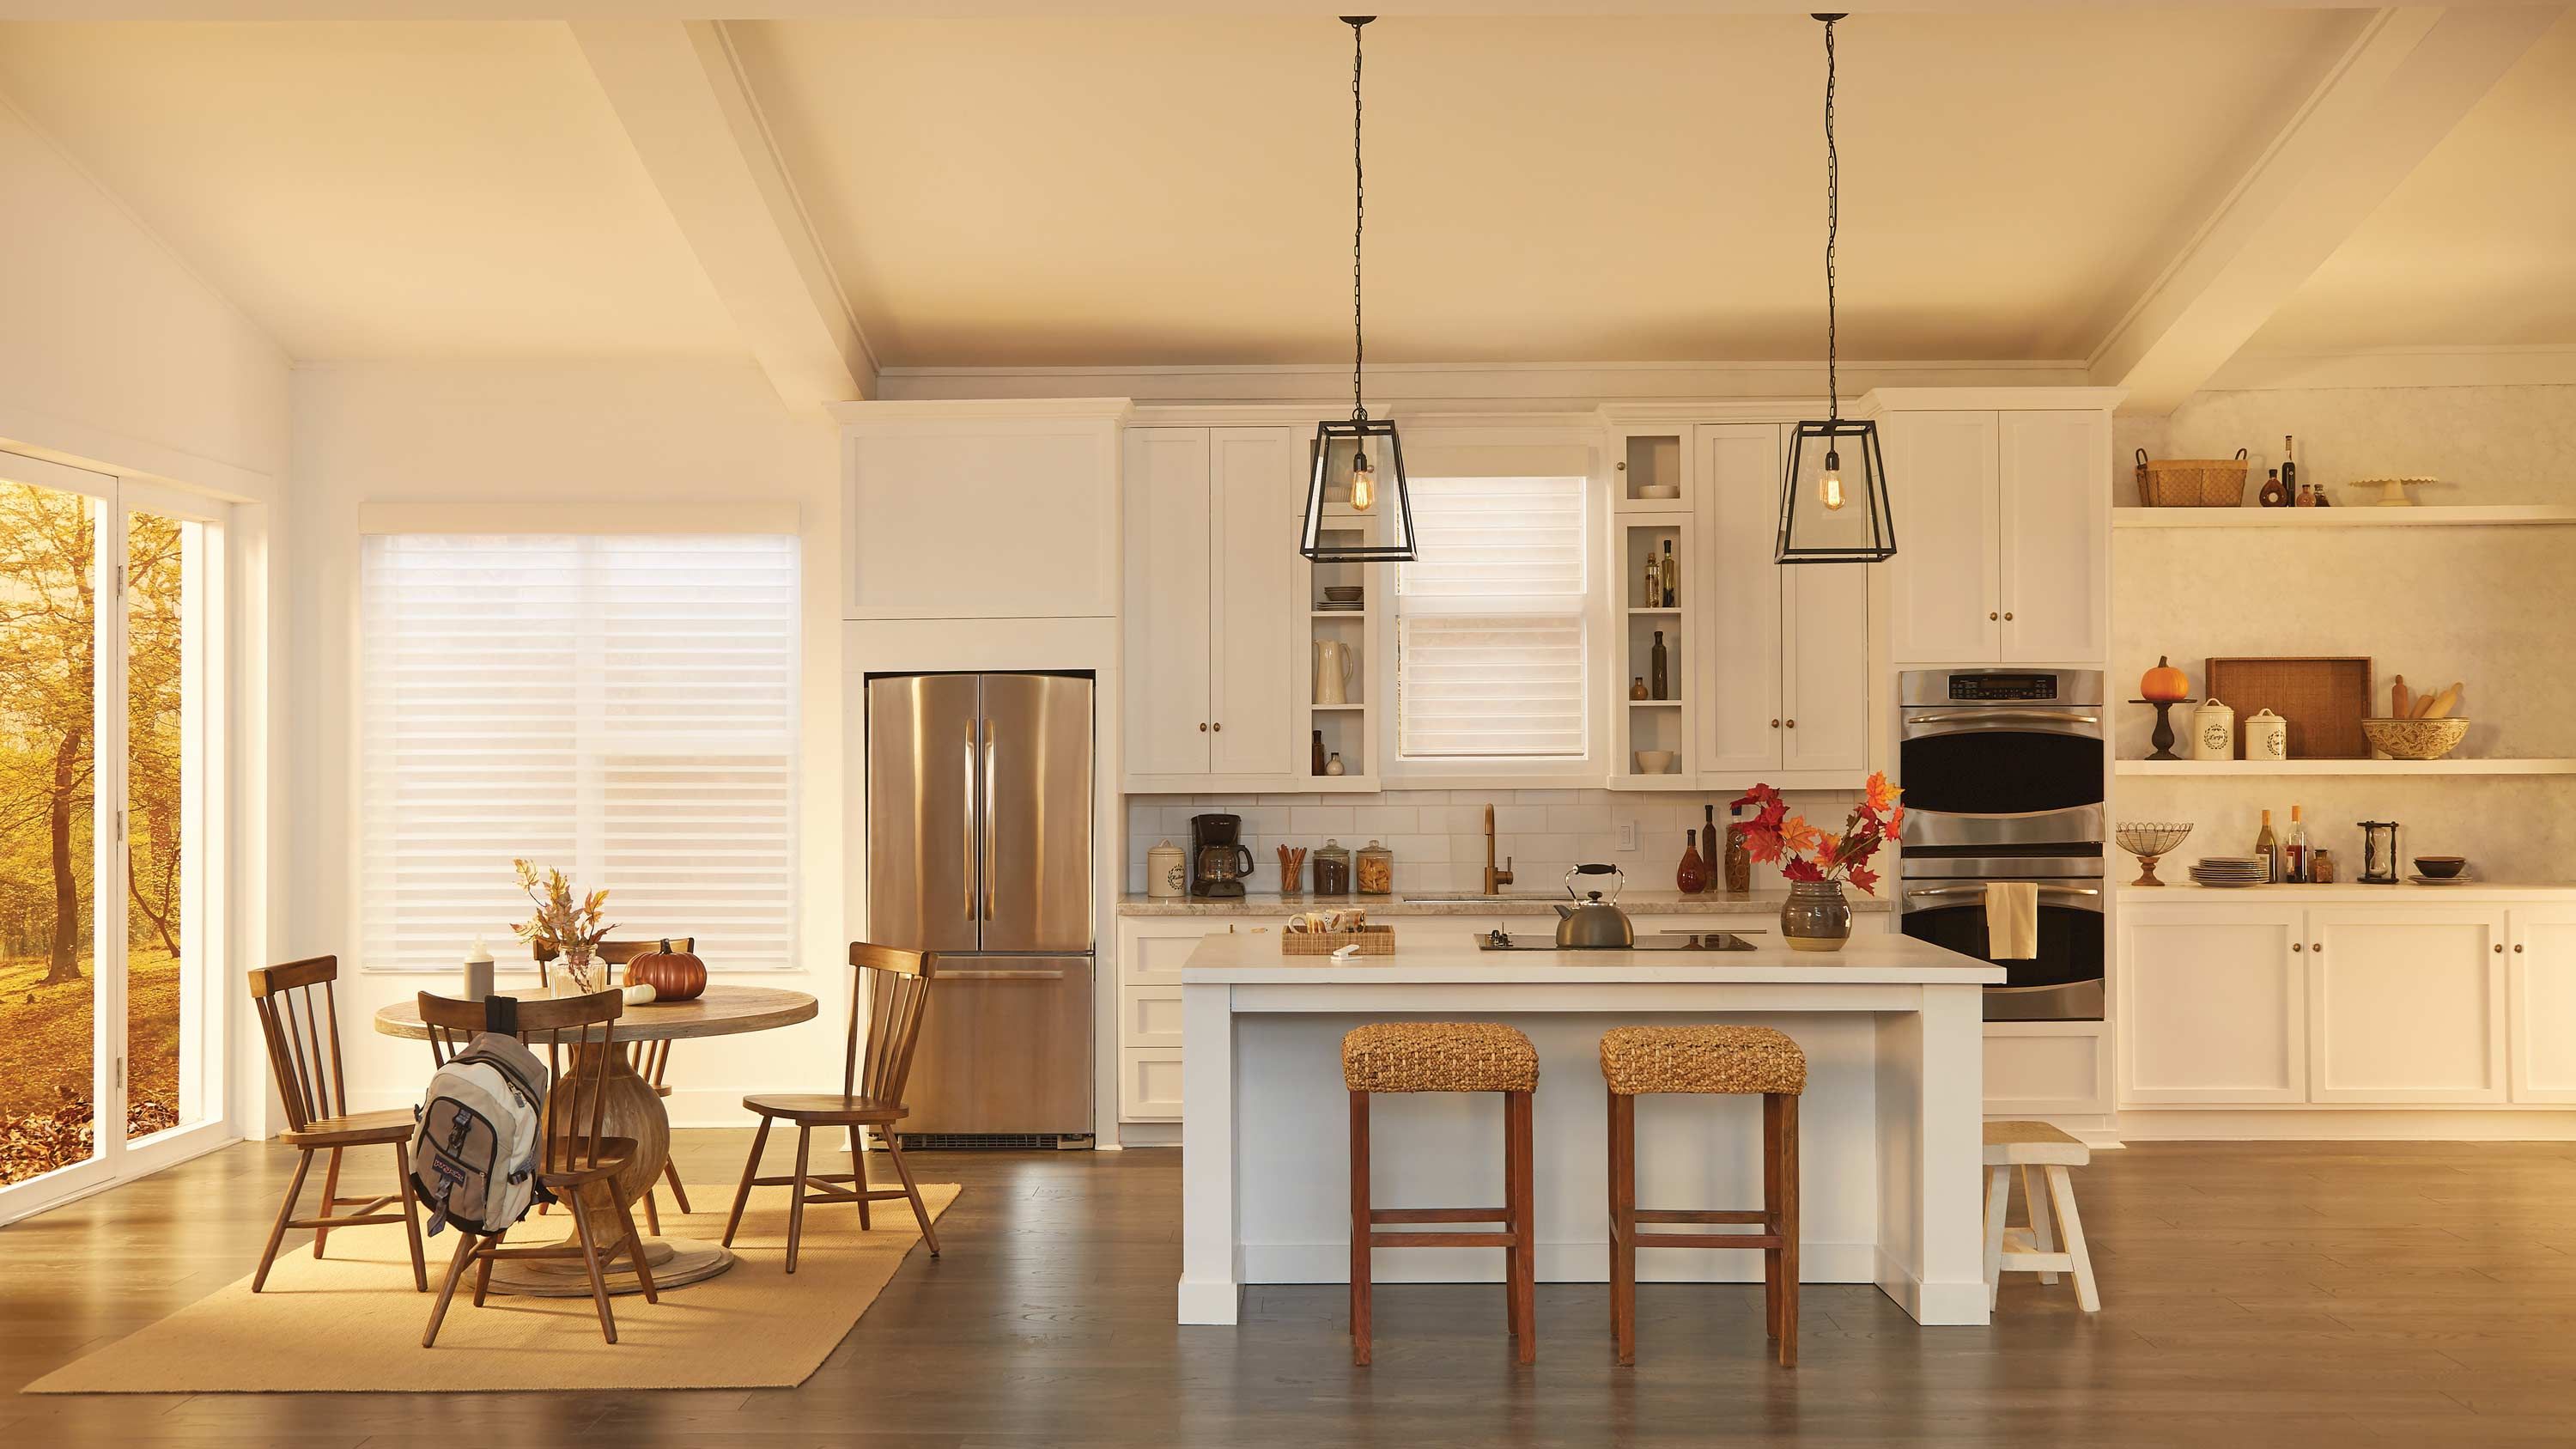 lutron image of kitchen with warm lighting